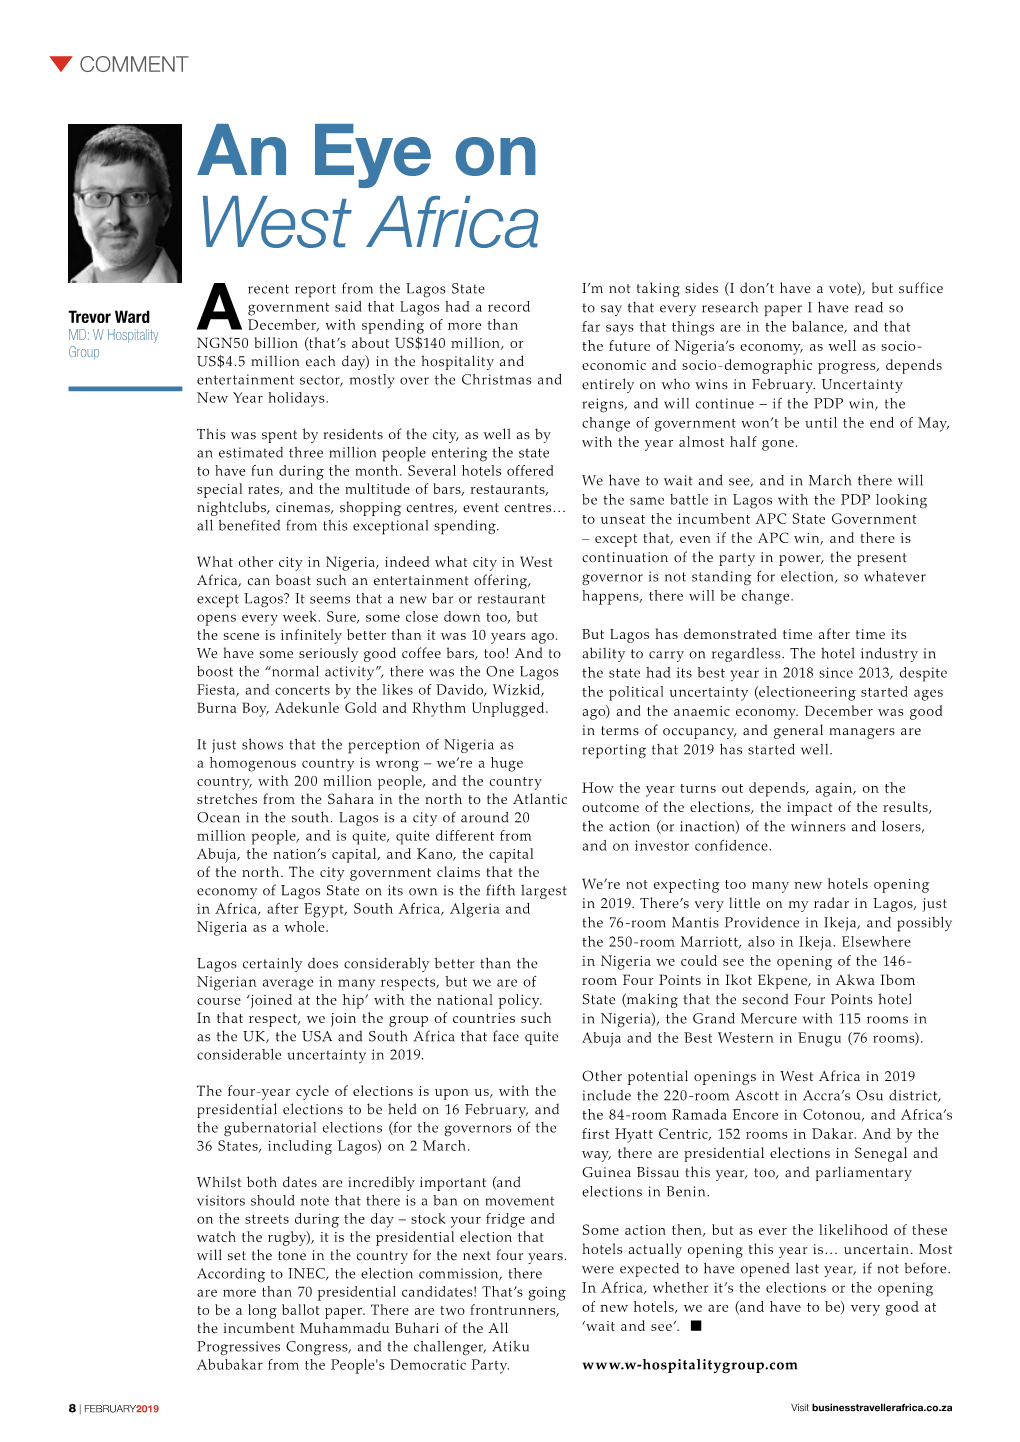 An Eye on West Africa